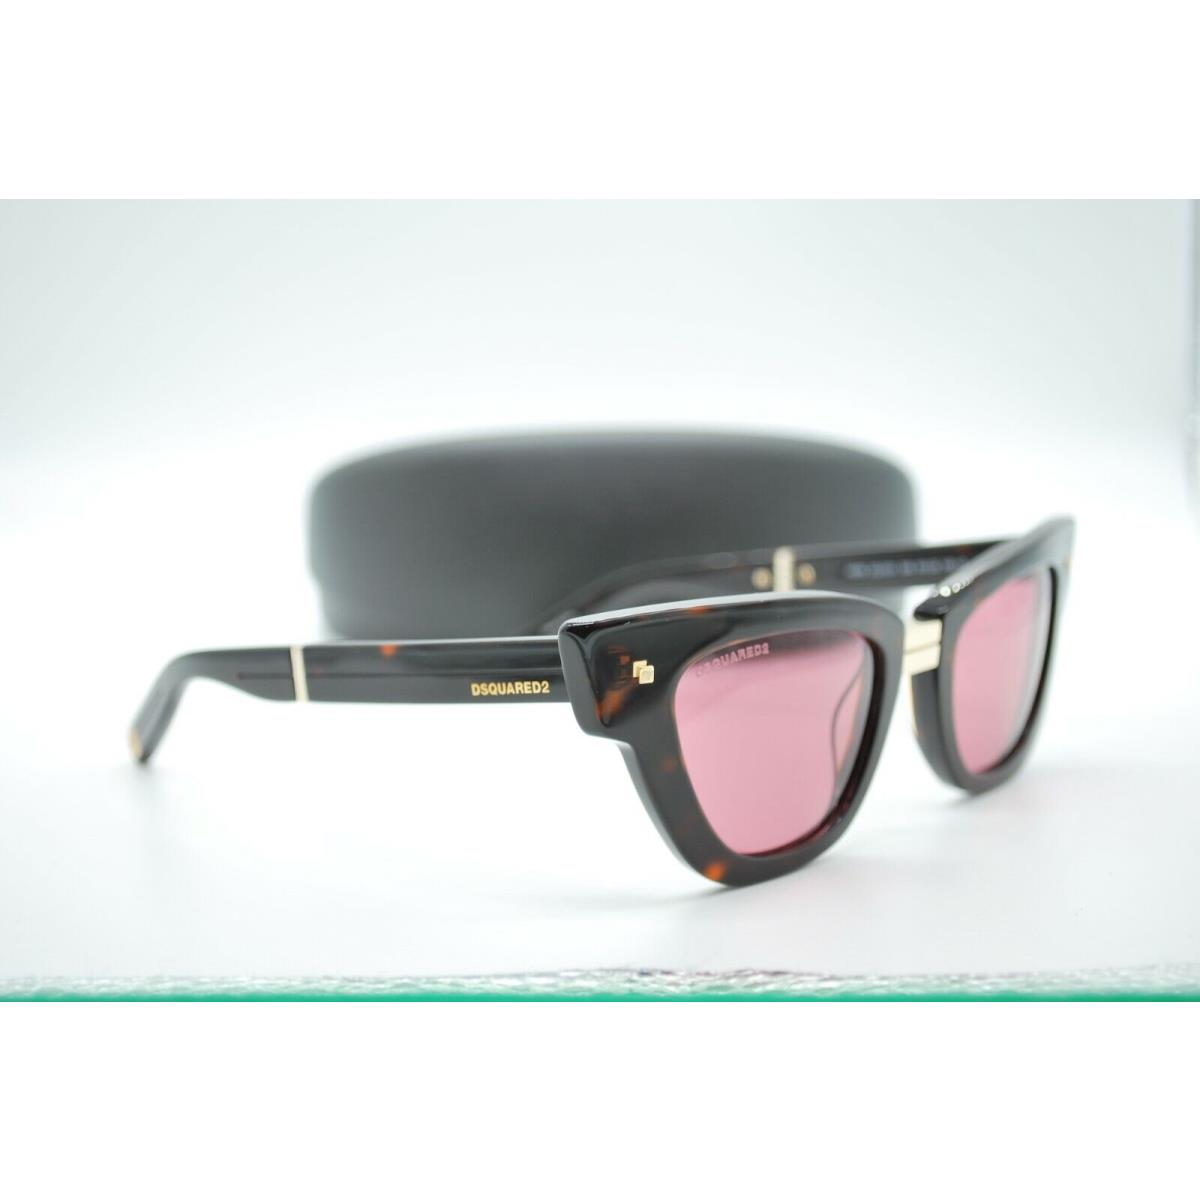 DSQUARED2 DQ 0331 52S Black Pink Frame Sunglasses 50-22